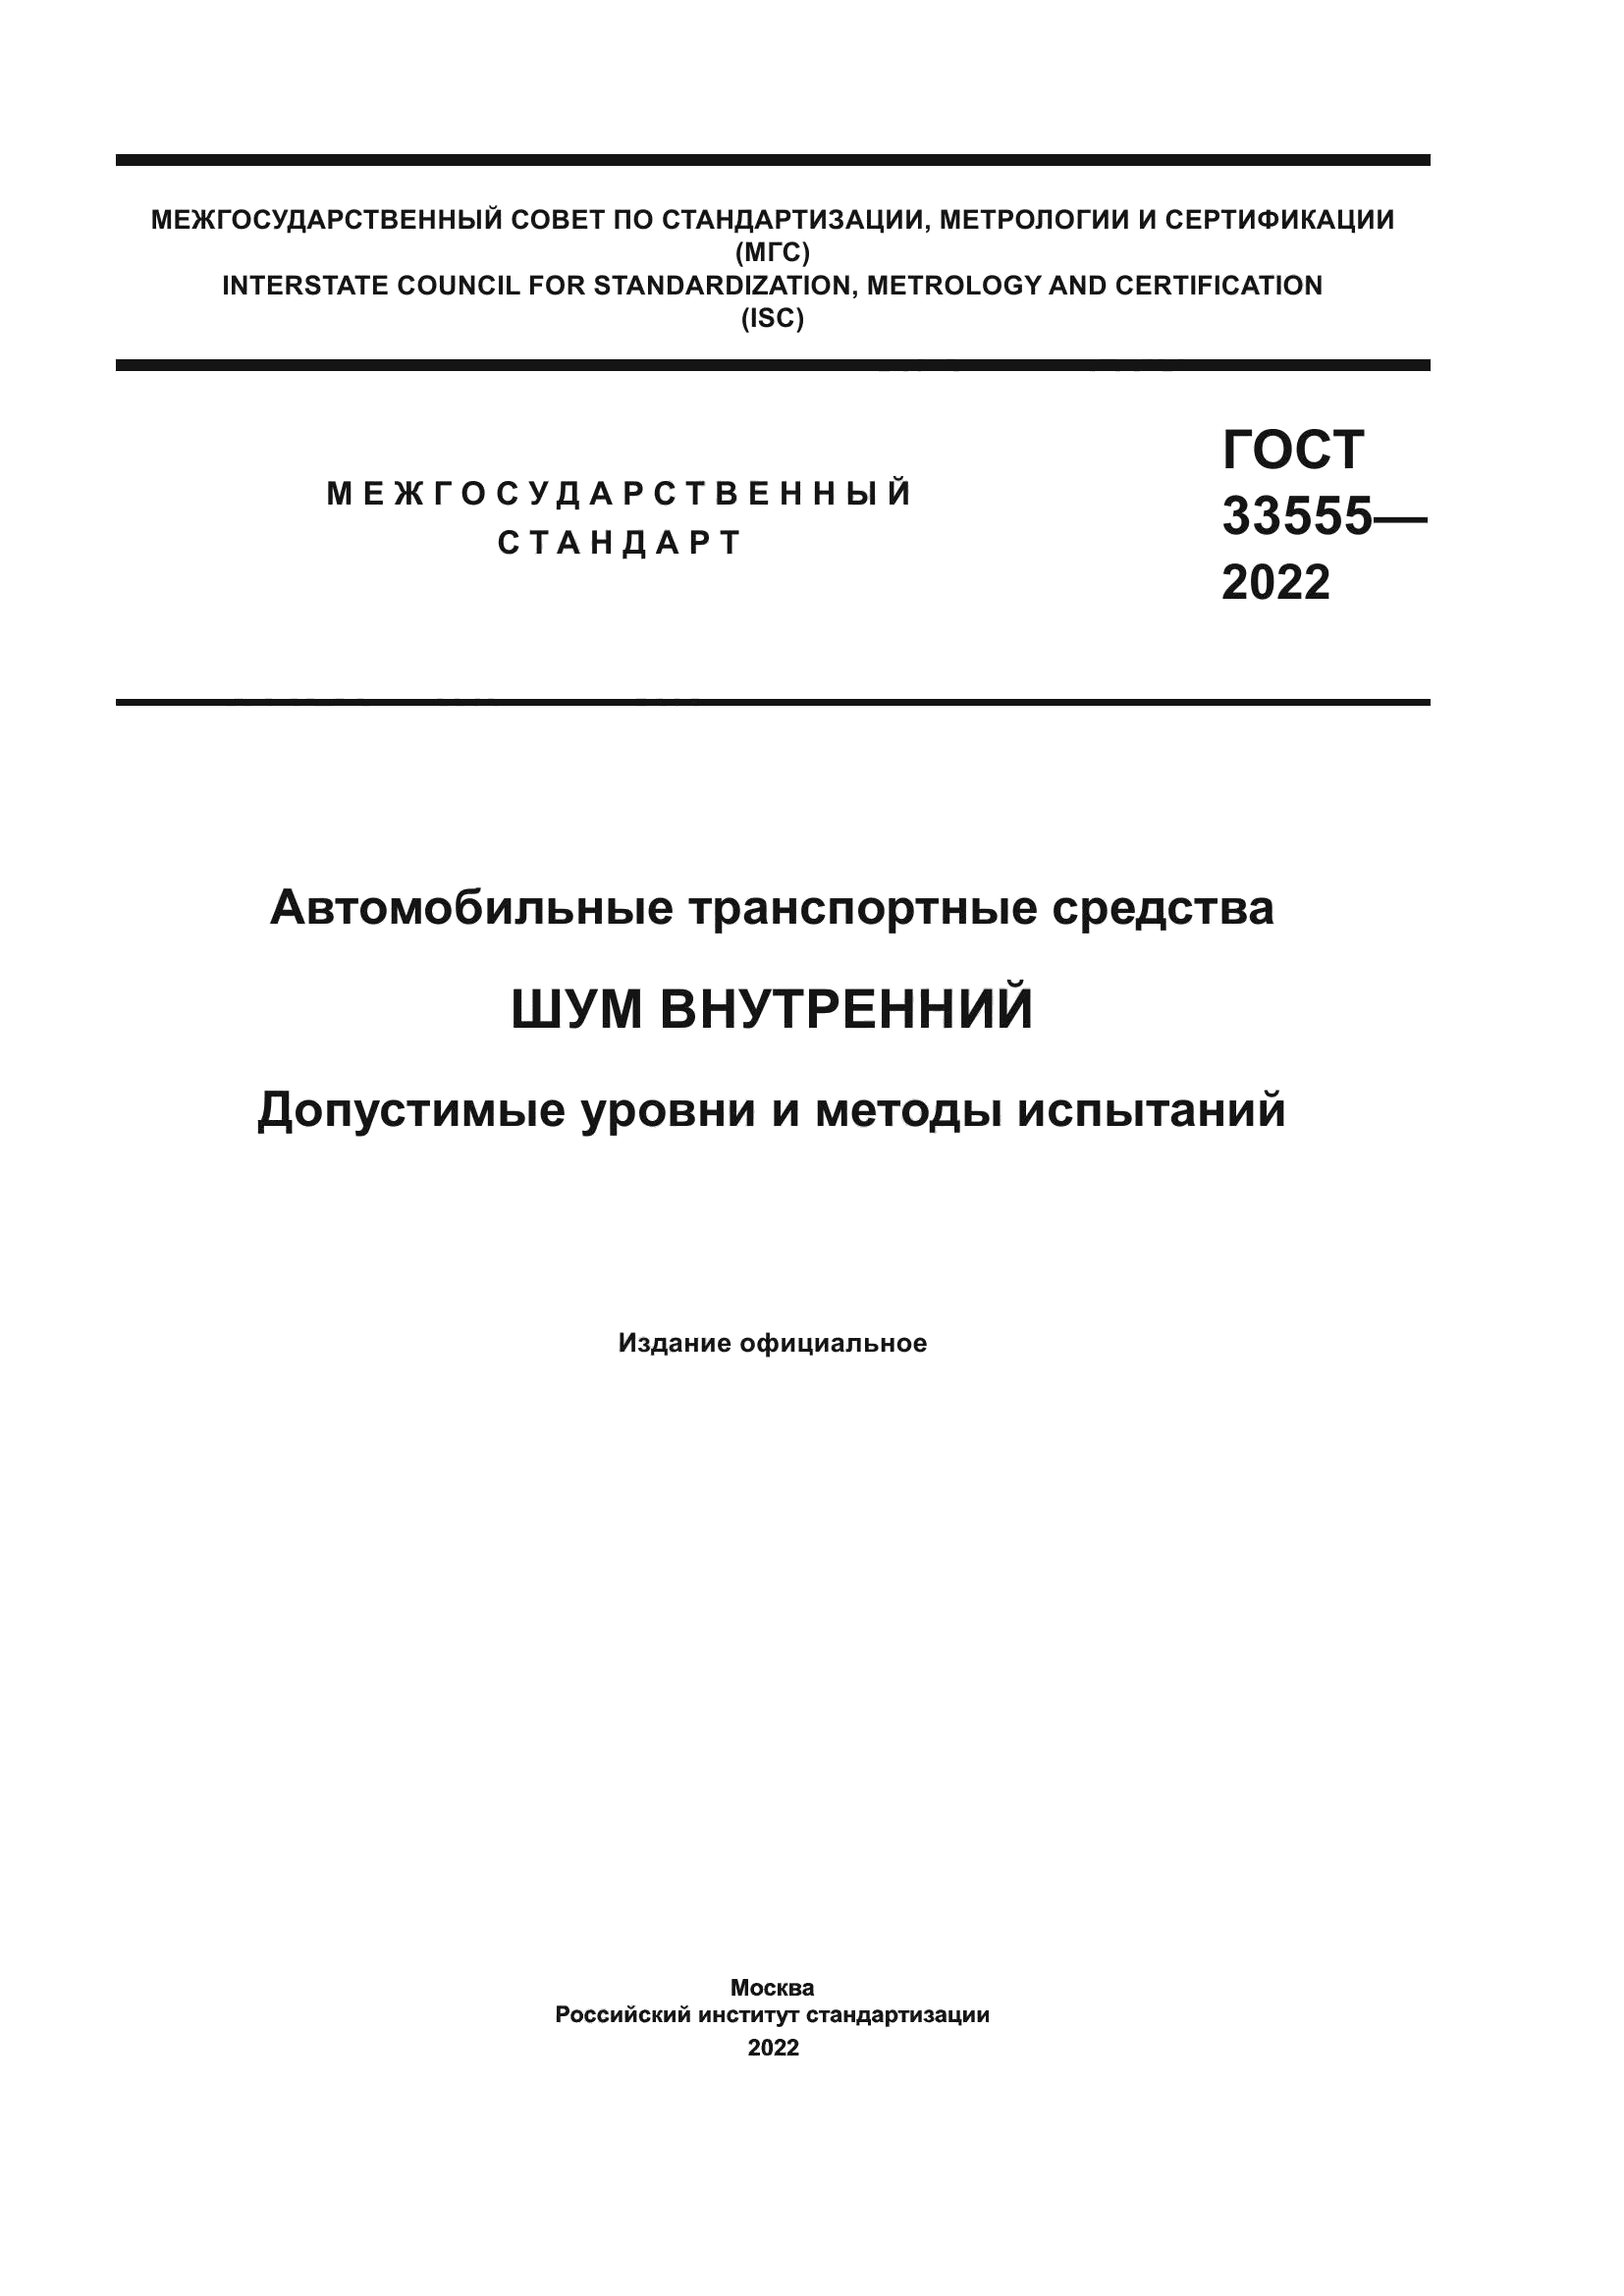 ГОСТ 33555-2022